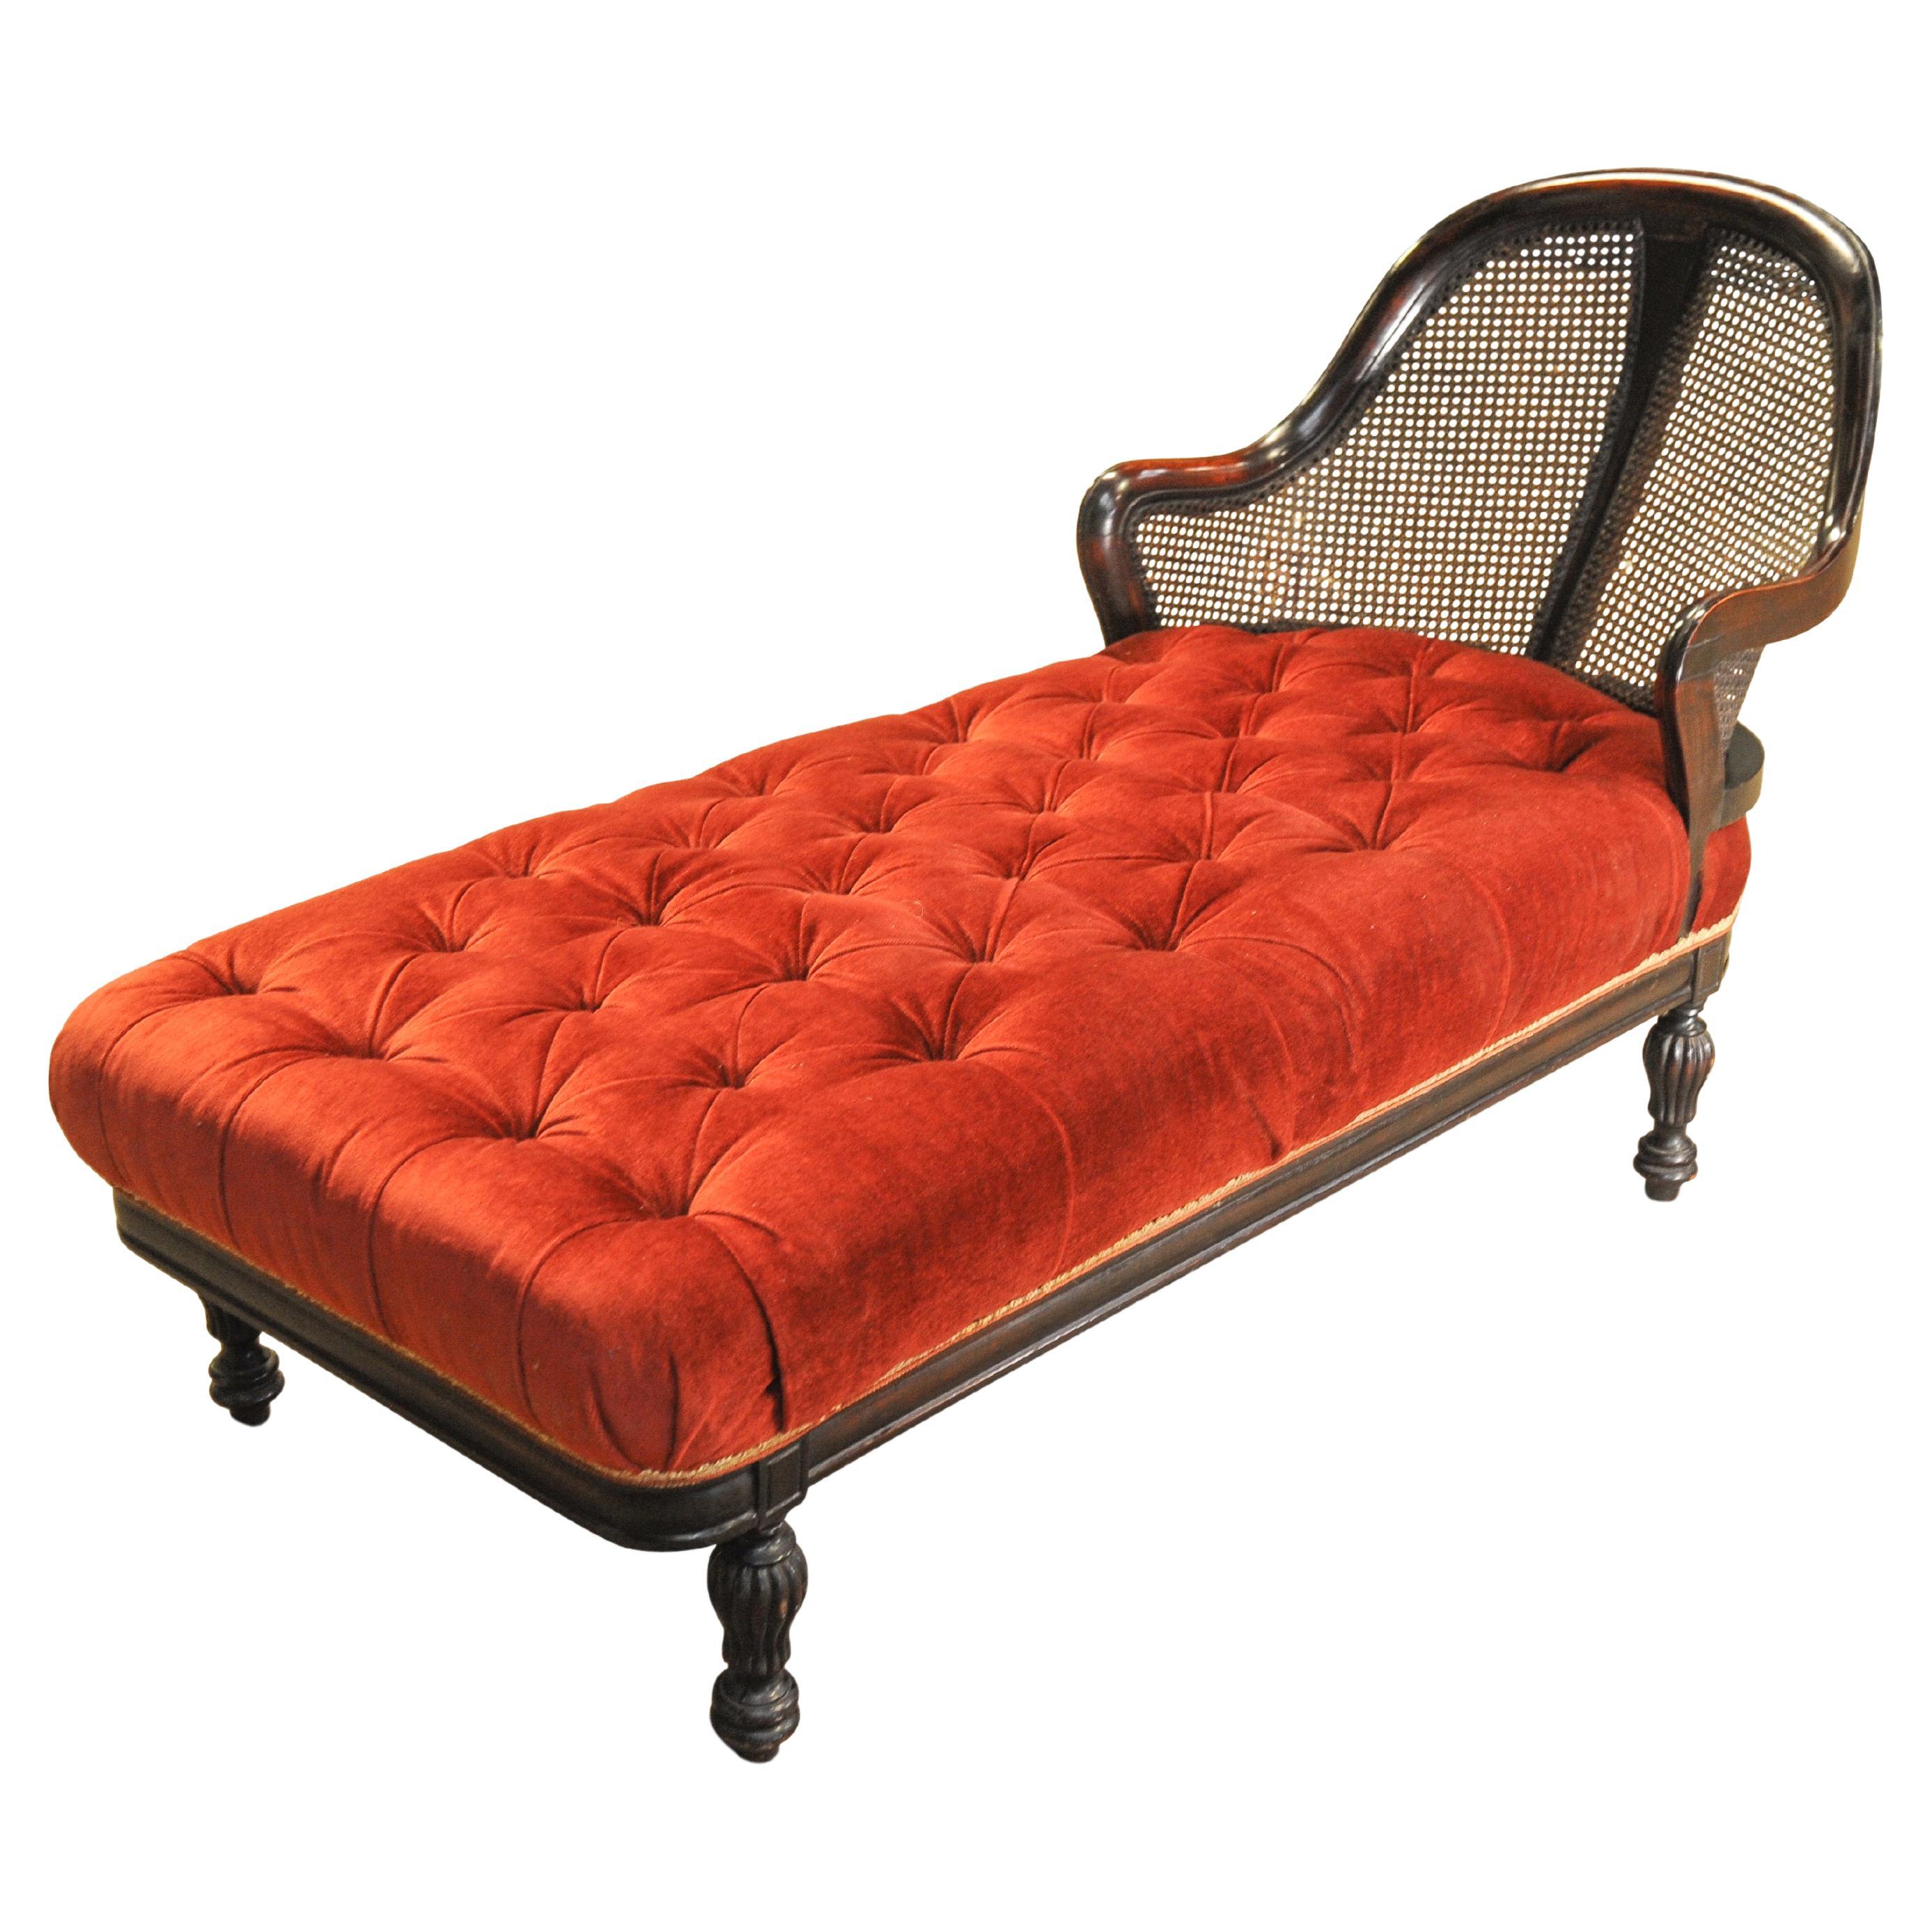 Seltene viktorianische rote Samt Chesterfield Bergere Chaise Longue / Day Bed 